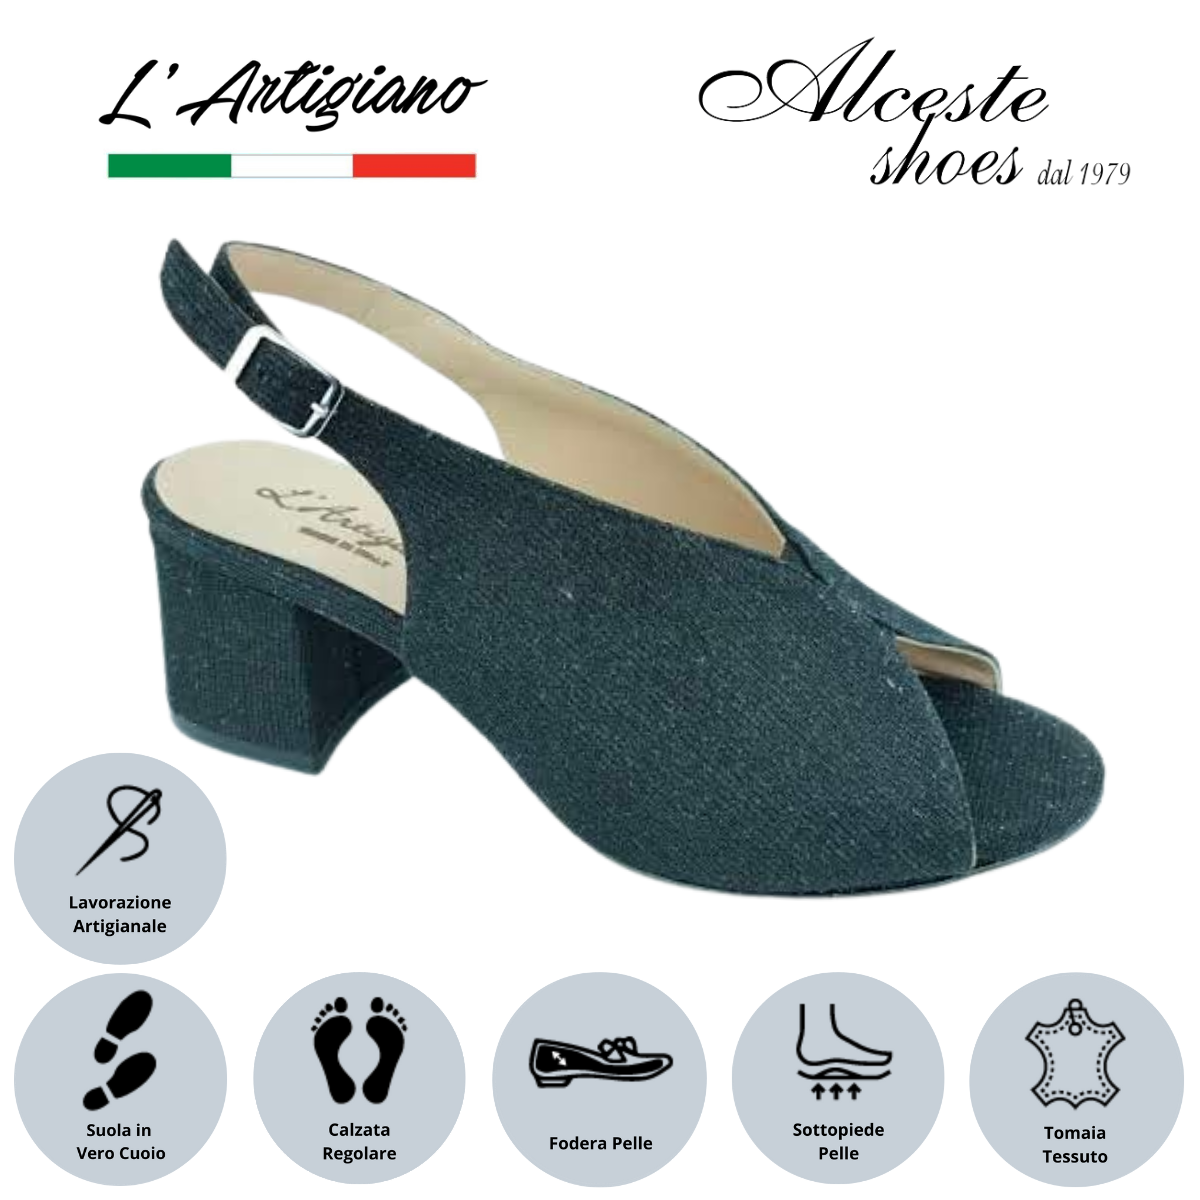 Sandalo Donna "L'Artigiano" Art. 125 Tessuto Lurex Nero Alceste Shoes 4 1 2